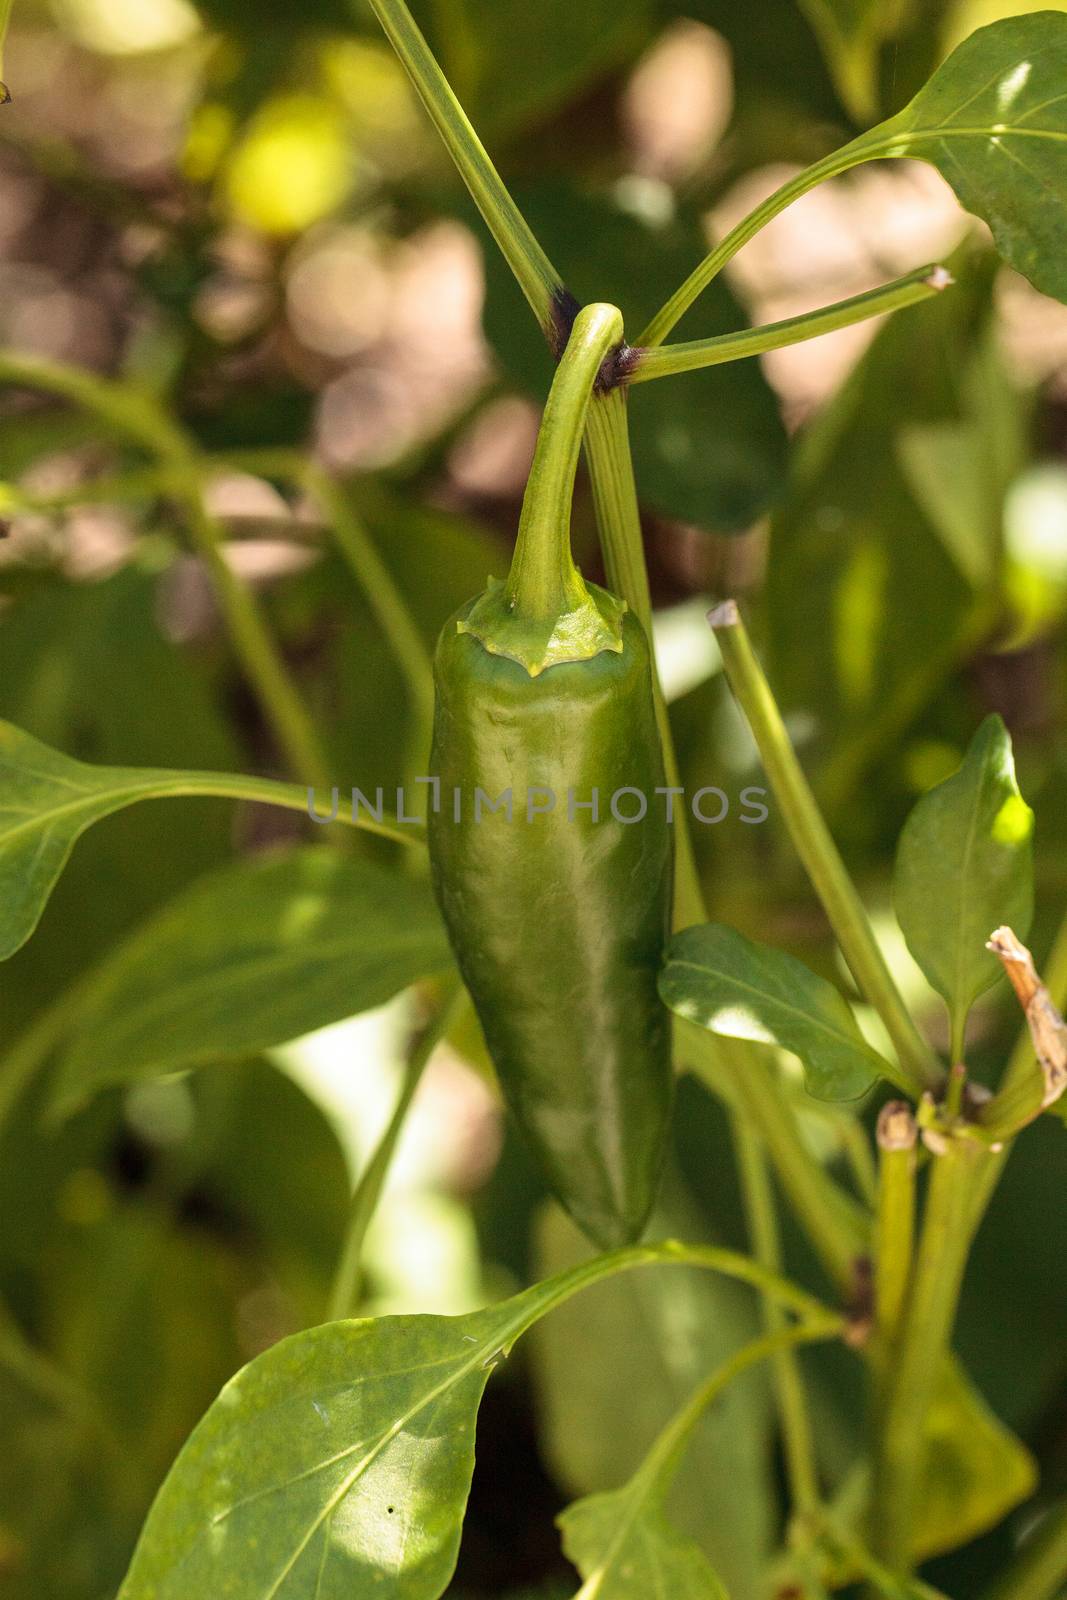 Cheyenne pepper hybrid in an organic vegetable garden by steffstarr